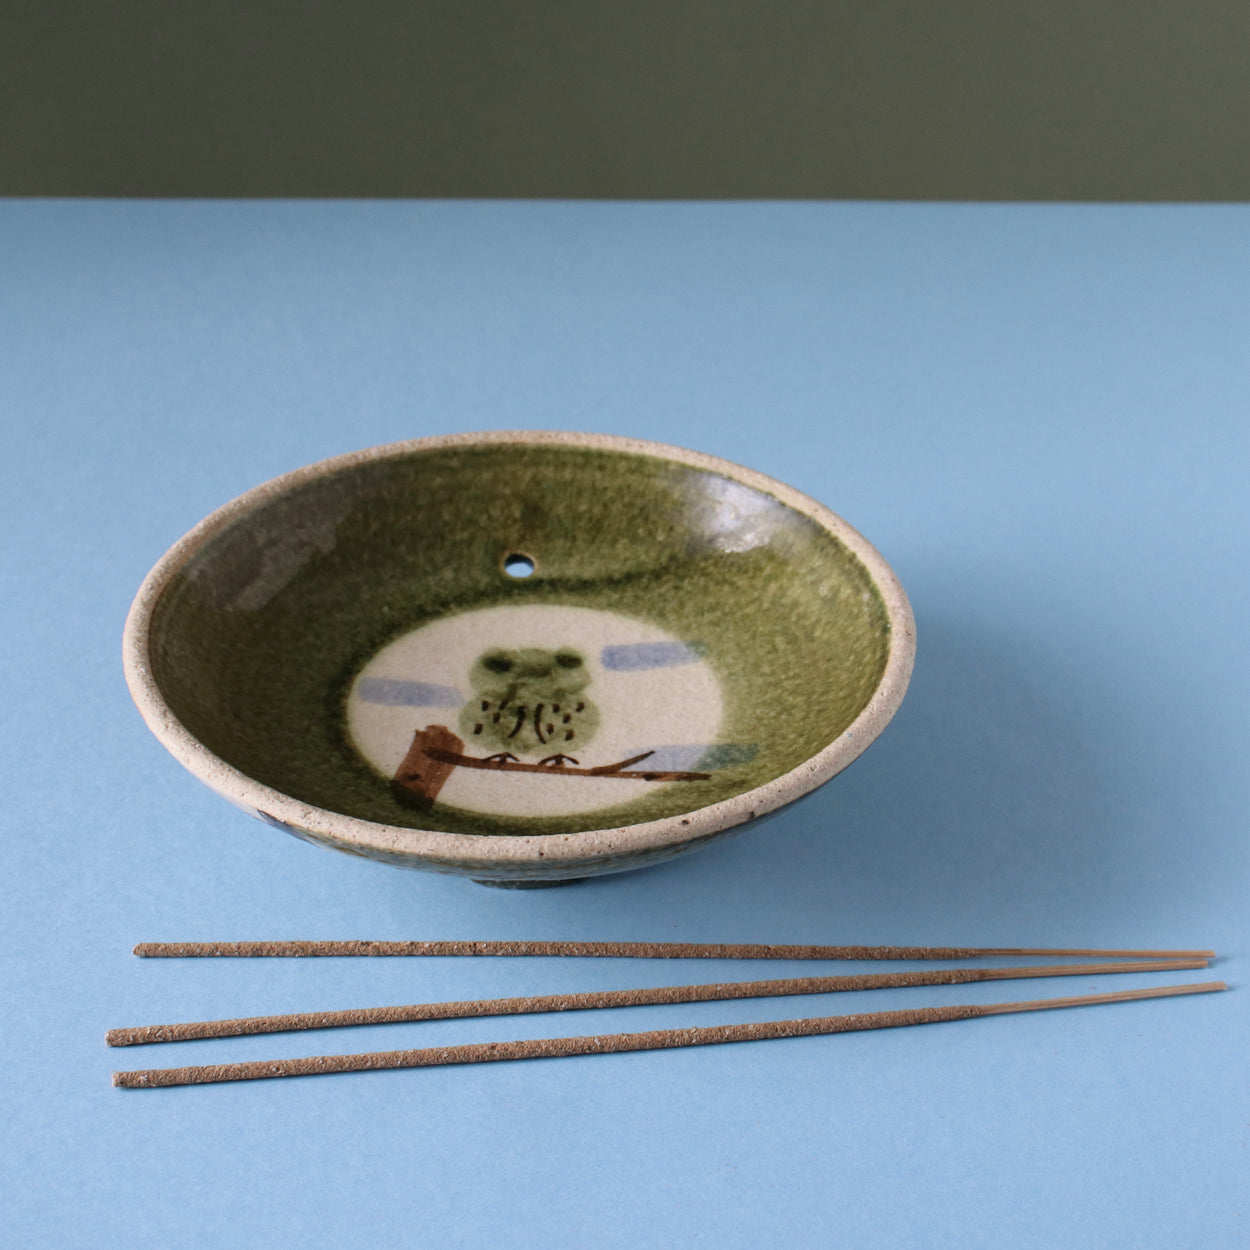 Vintage Japanese owl bowl incense holder with blue background with incense sticks